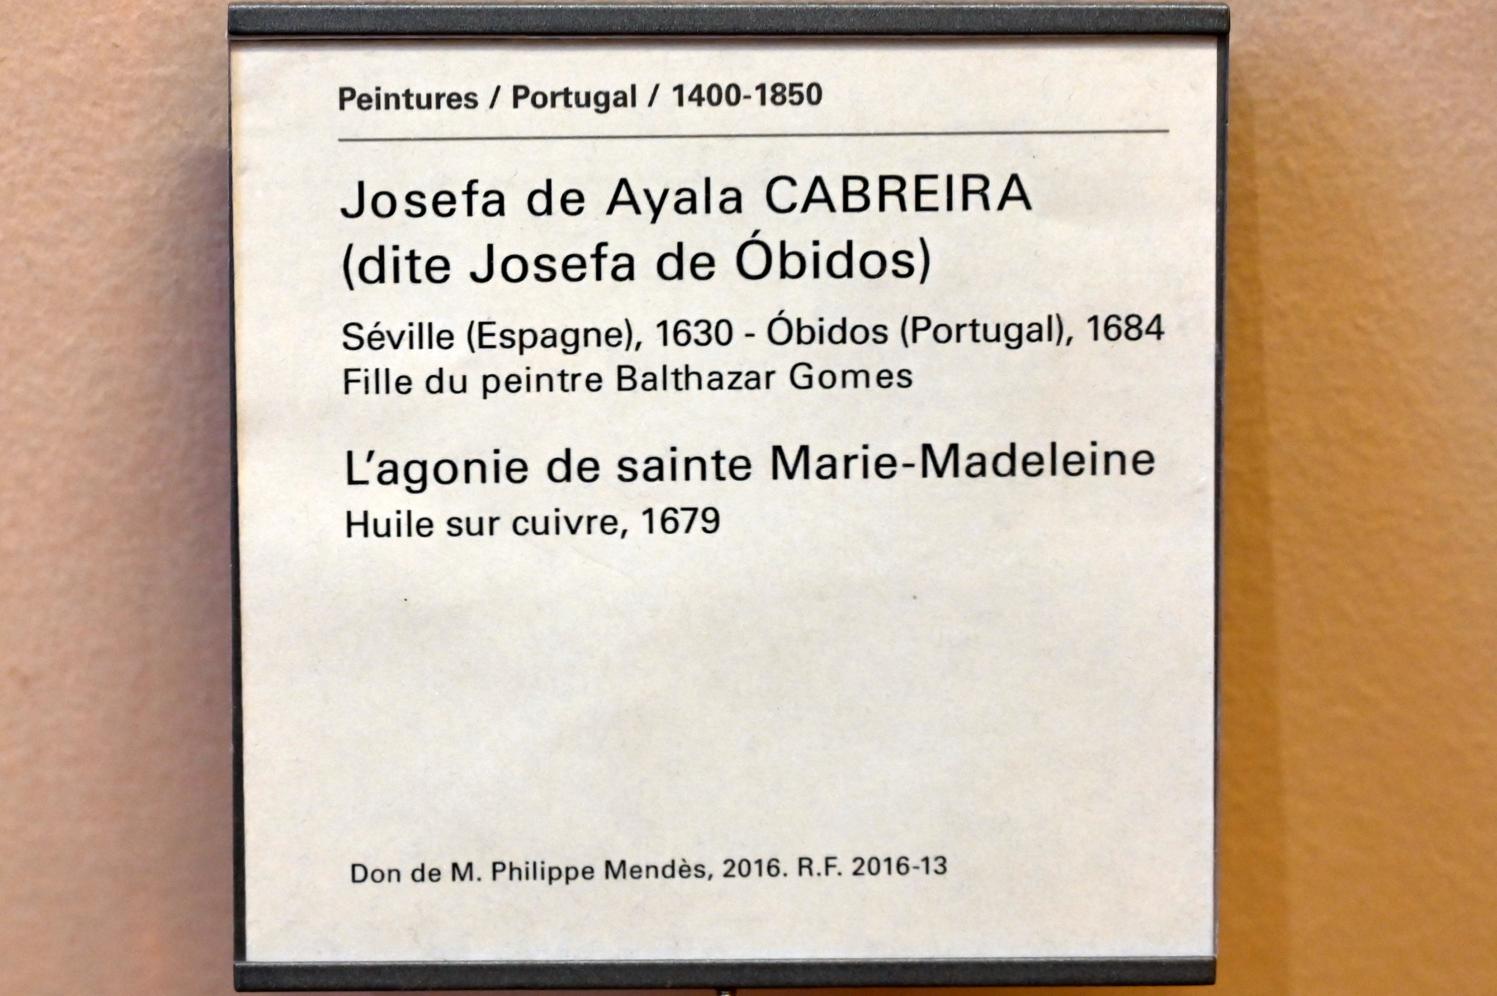 Josefa de Óbidos (Josefa de Ayala) (1679), Die Agonie der Heiligen Maria Magdalena, Paris, Musée du Louvre, Saal 733, 1679, Bild 2/2